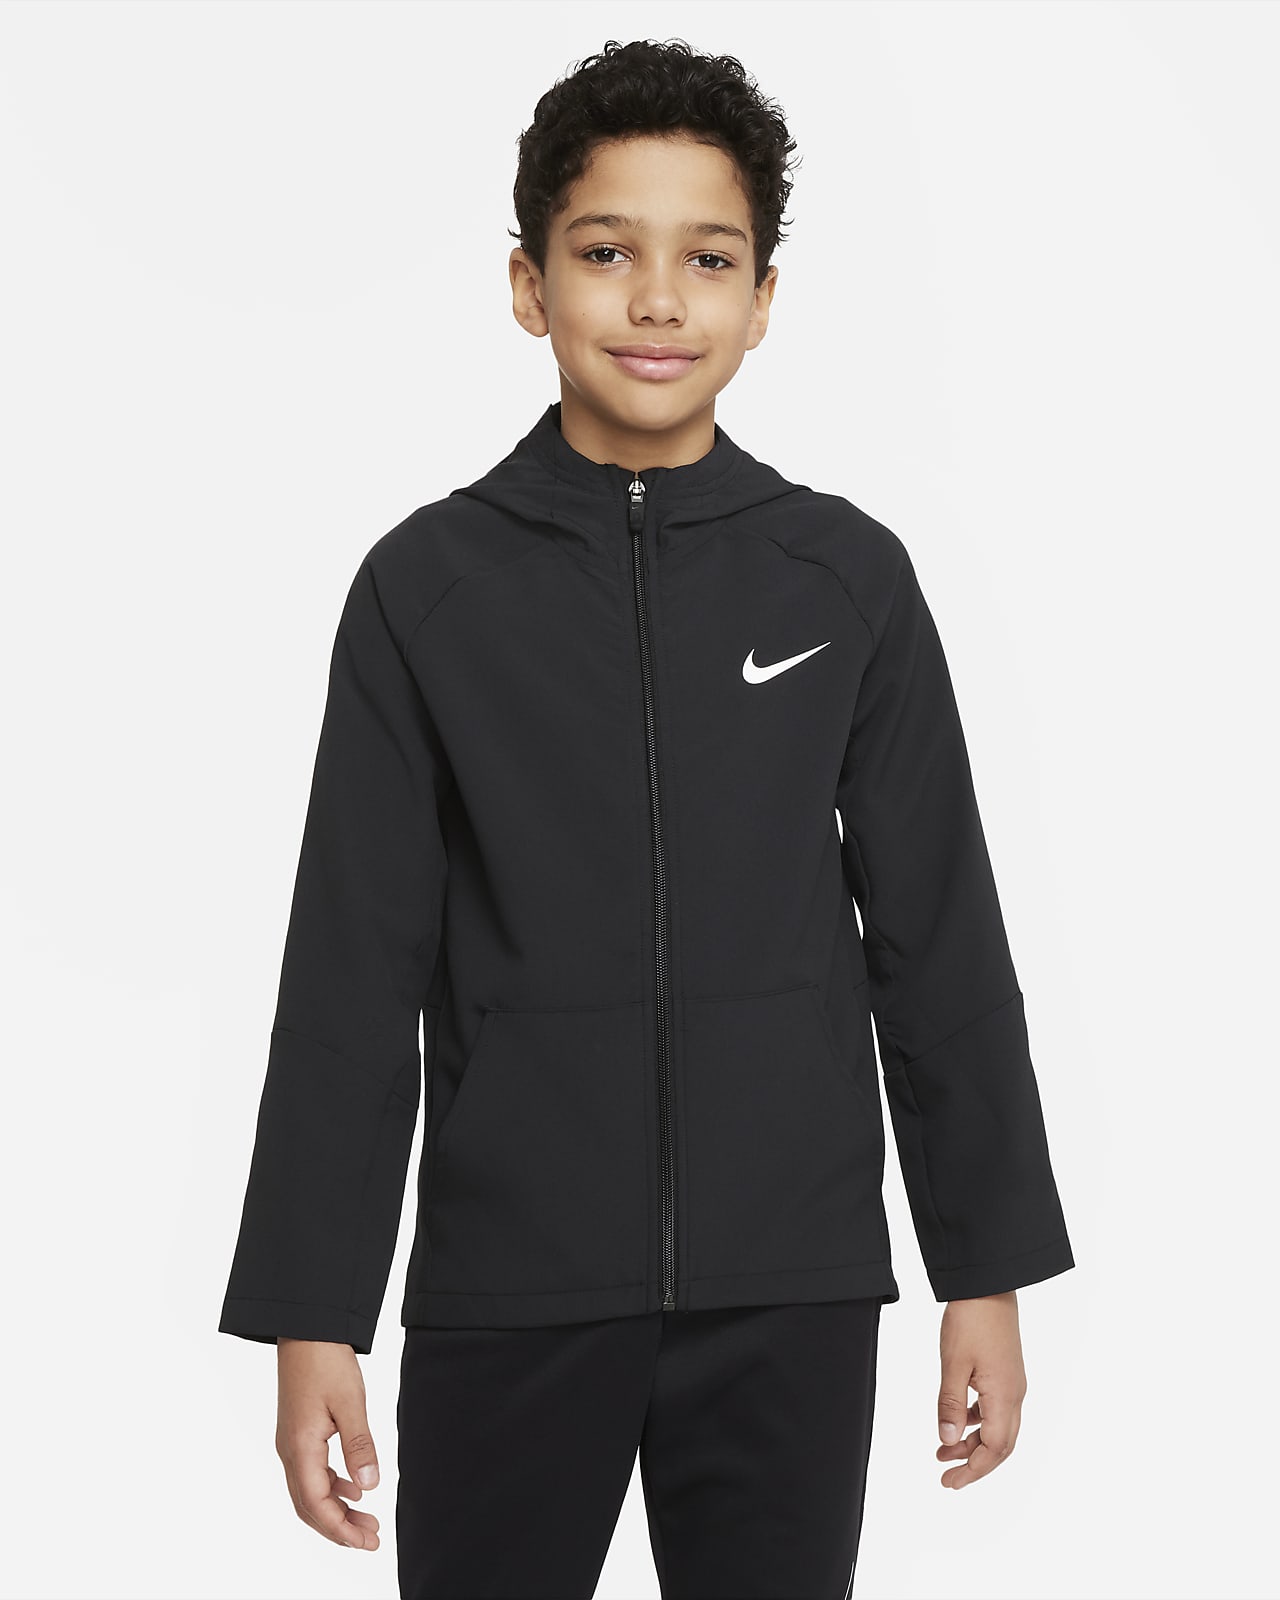 Nike Dri-FIT Geweven trainingsjack voor jongens